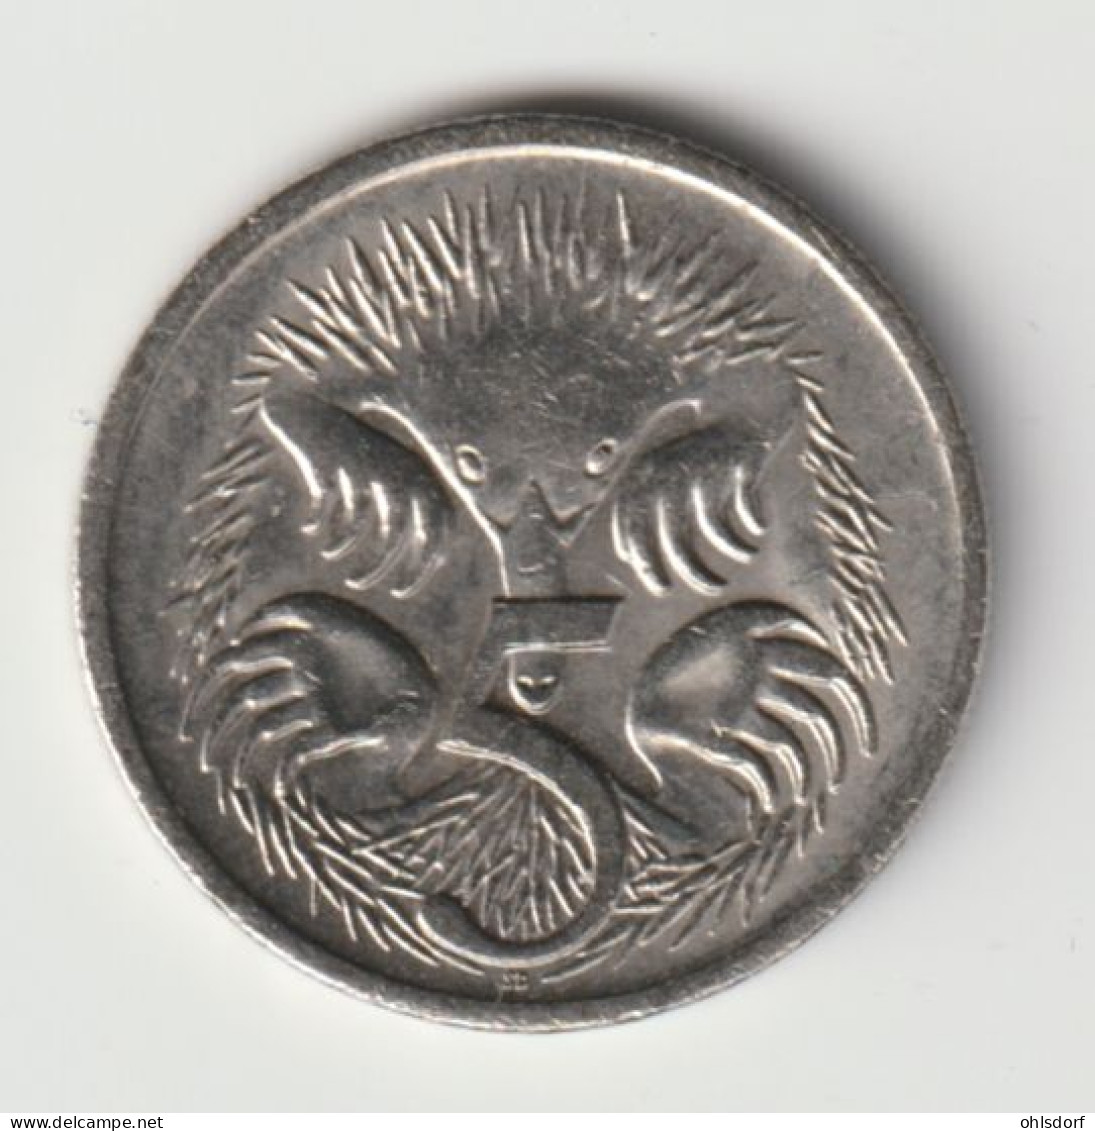 AUSTRALIA 2000: 5 Cents, KM 401 - 5 Cents